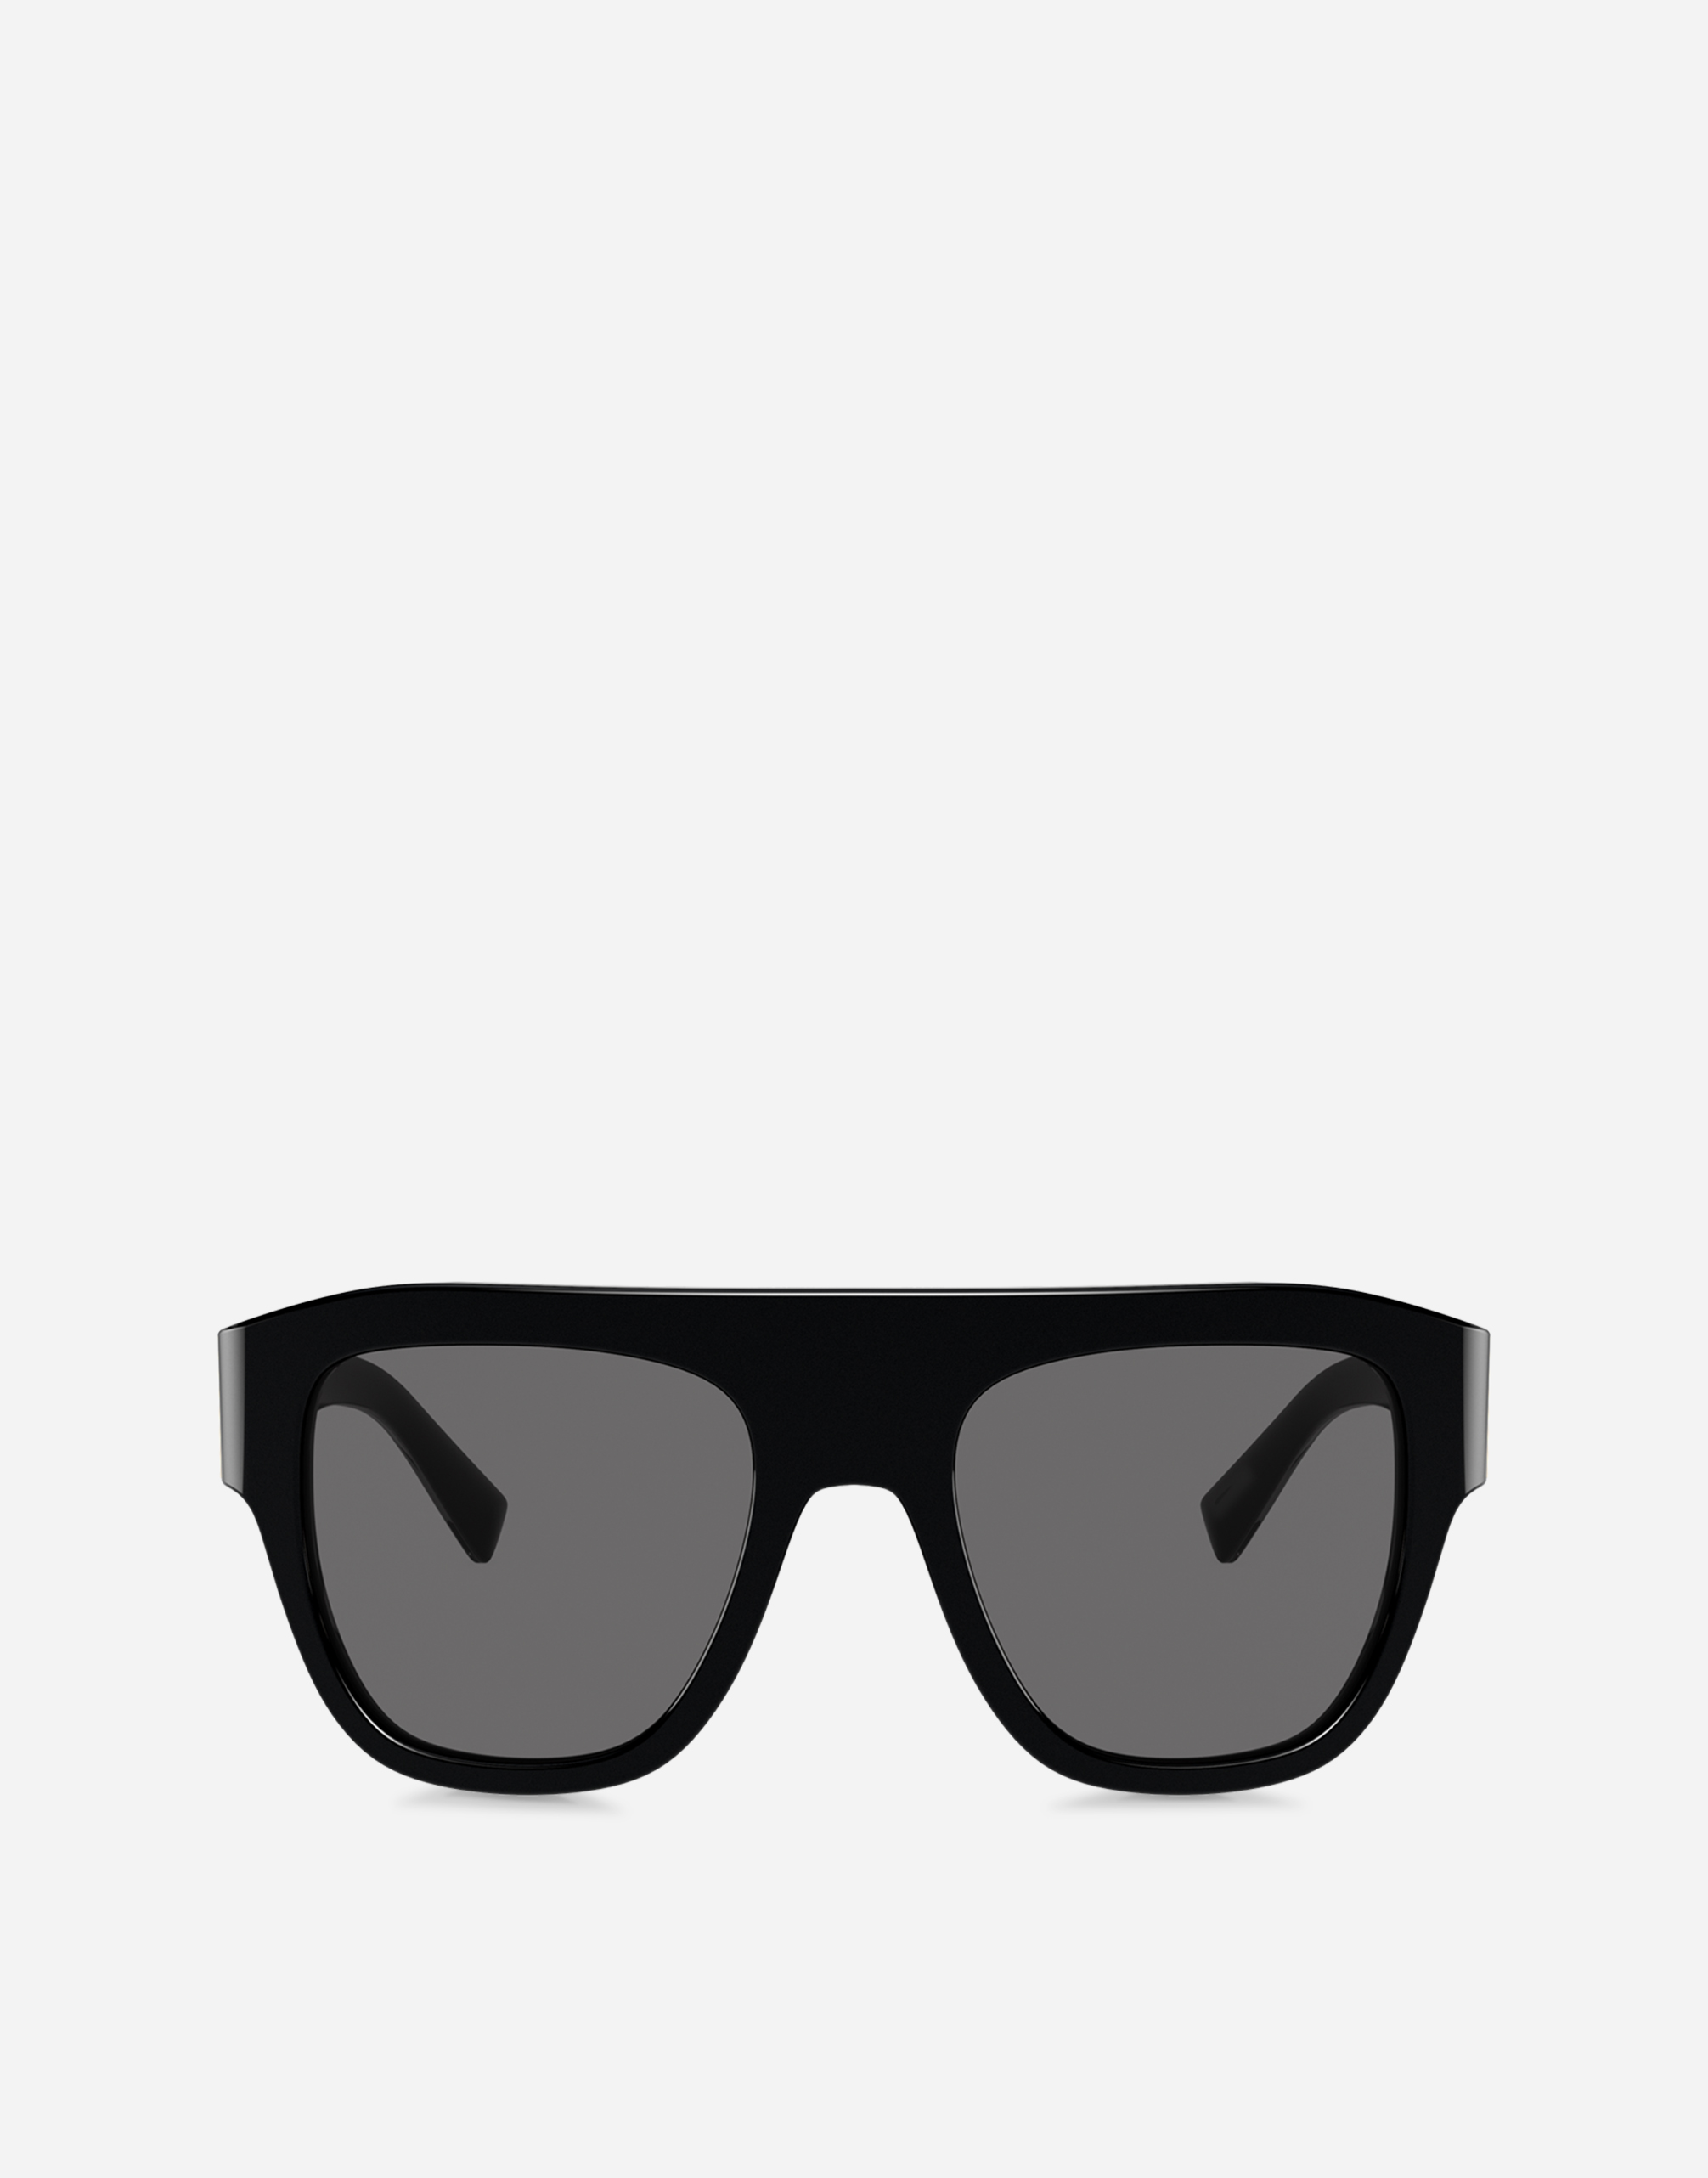 Bold black sunglasses in black